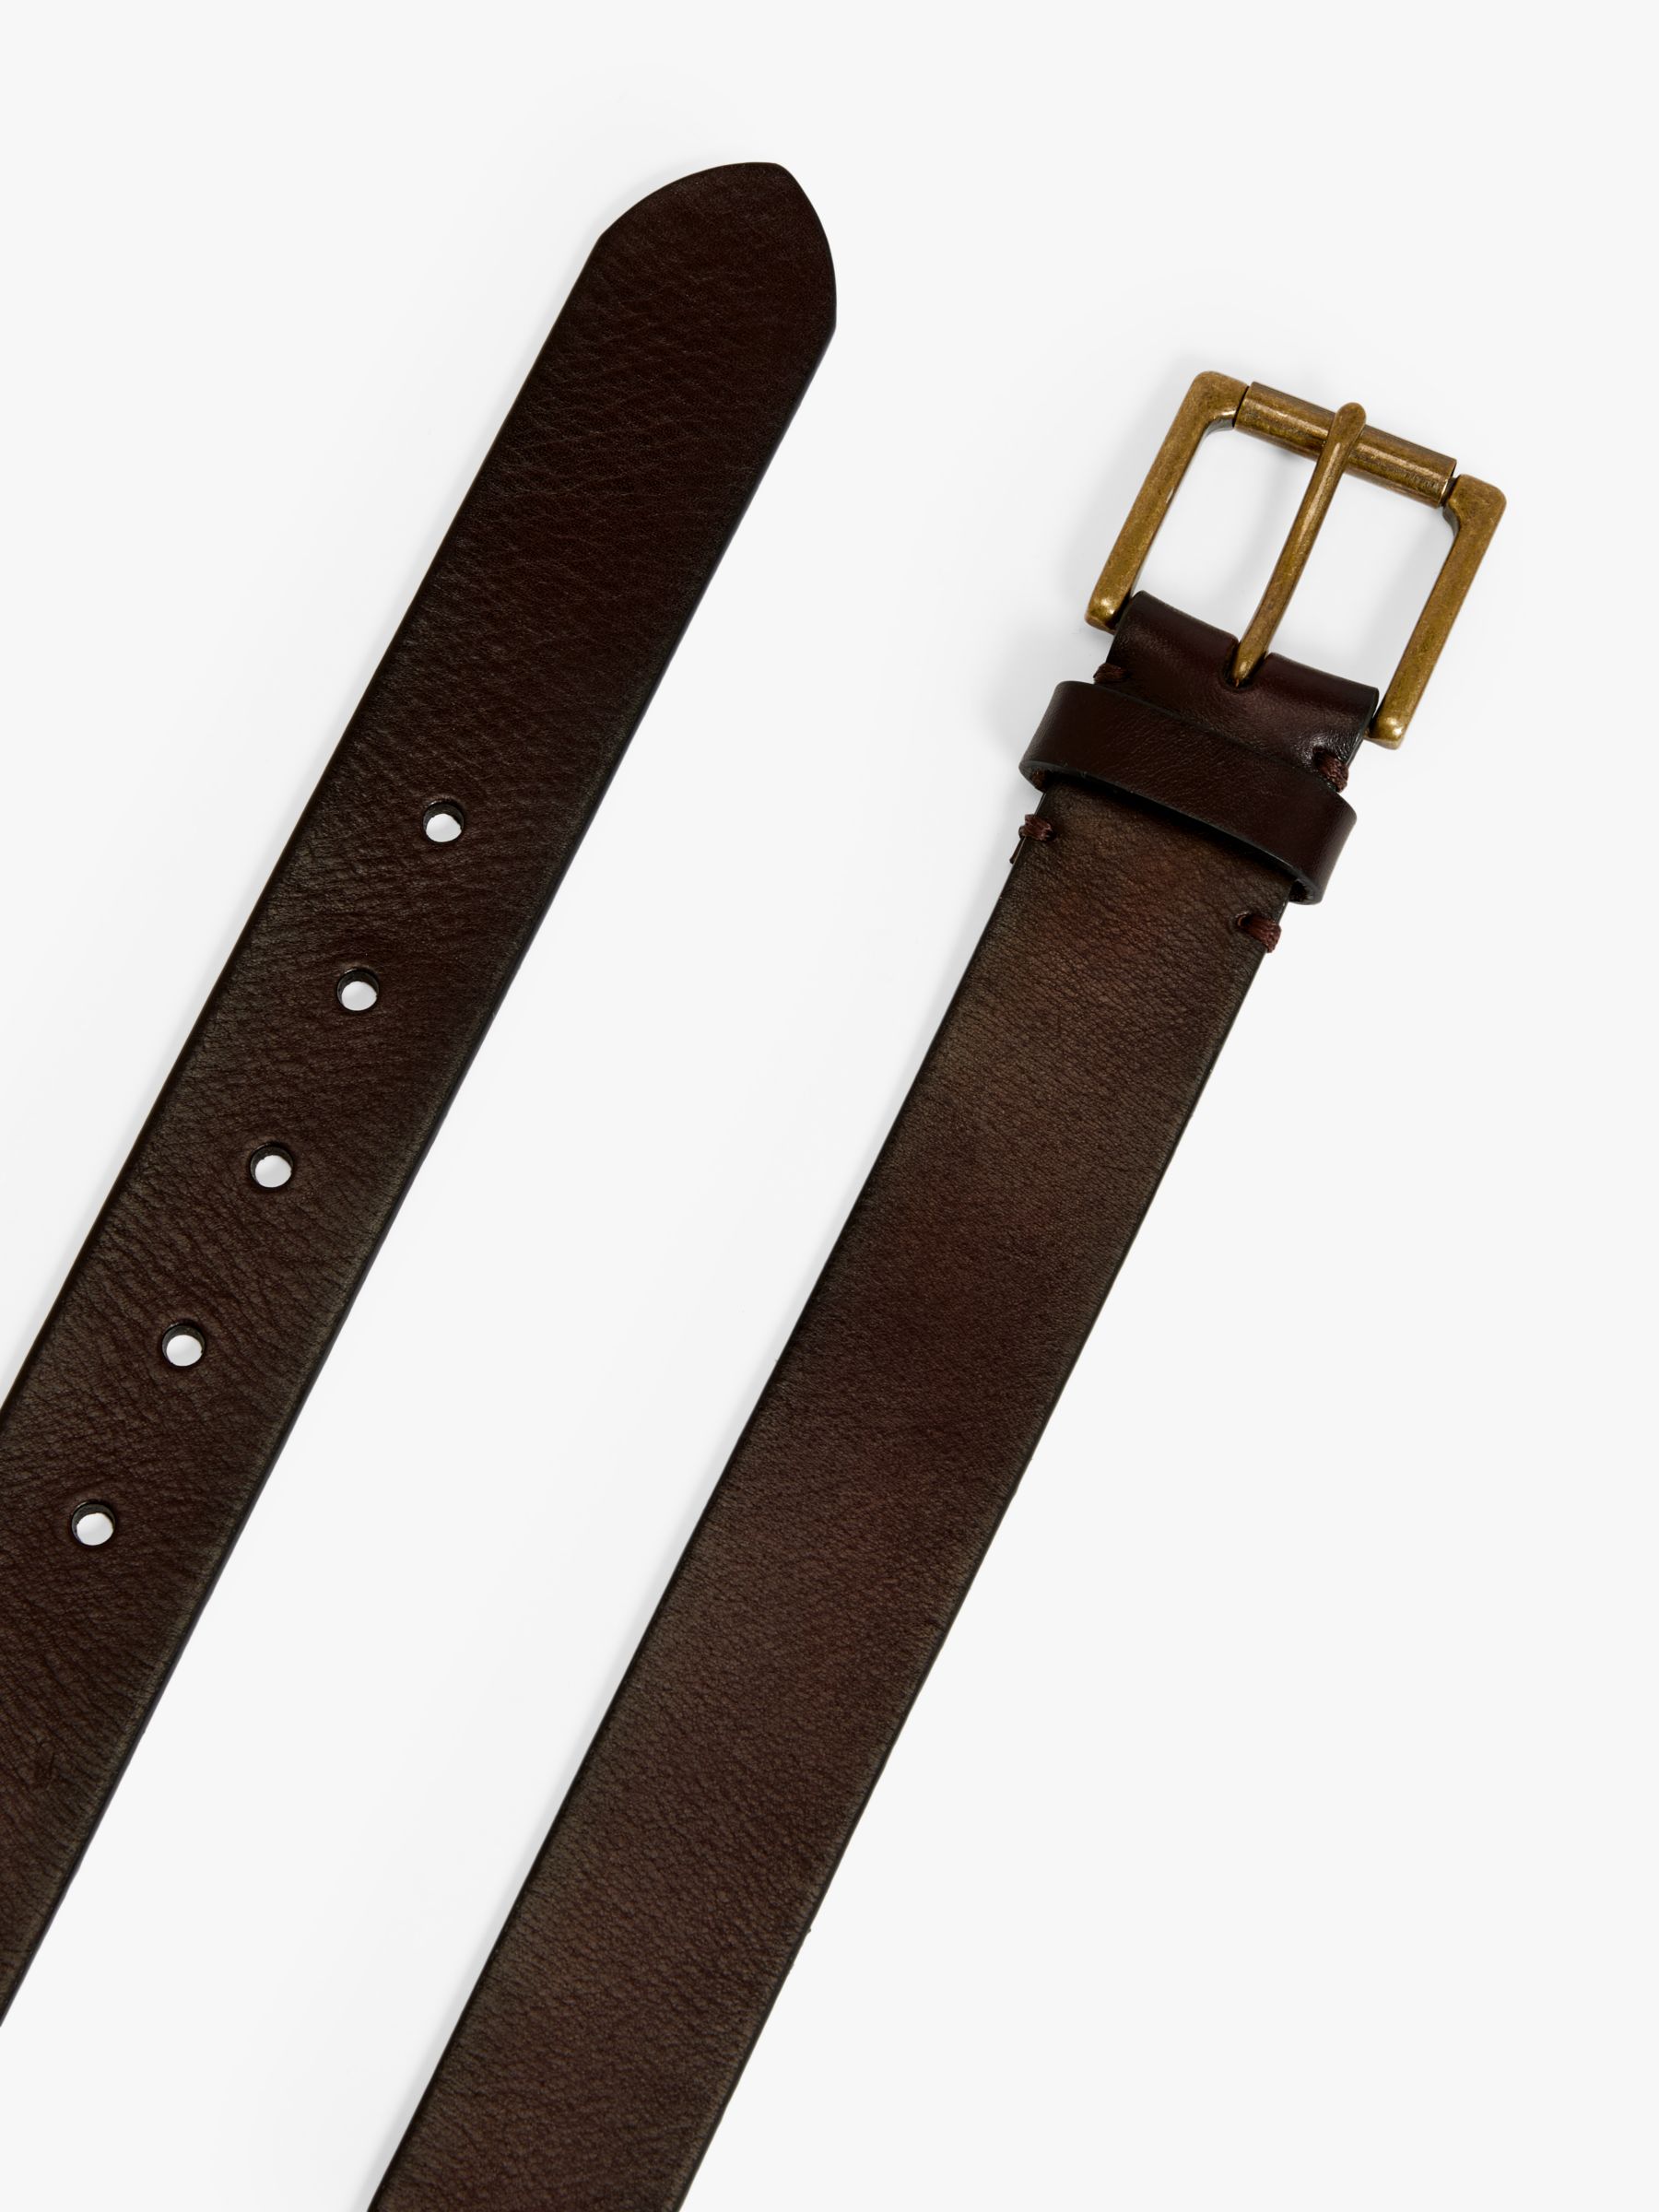 John Lewis 35mm Roller Buckle Leather Belt, Brown, S